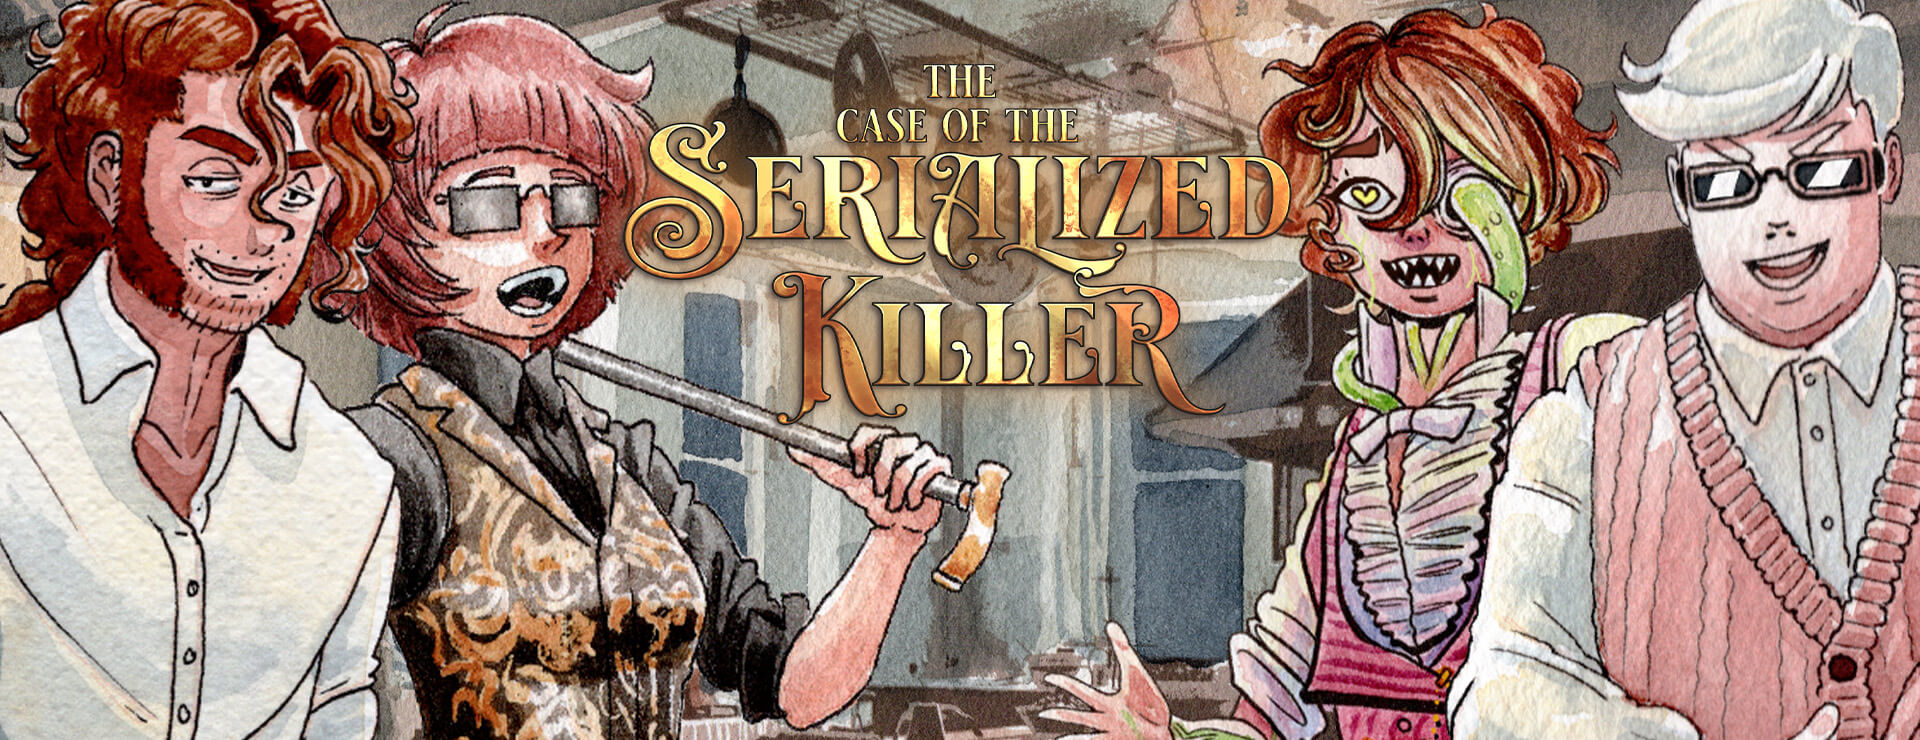 The Case of the Serialized Killer - Japanisches Adventure Spiel